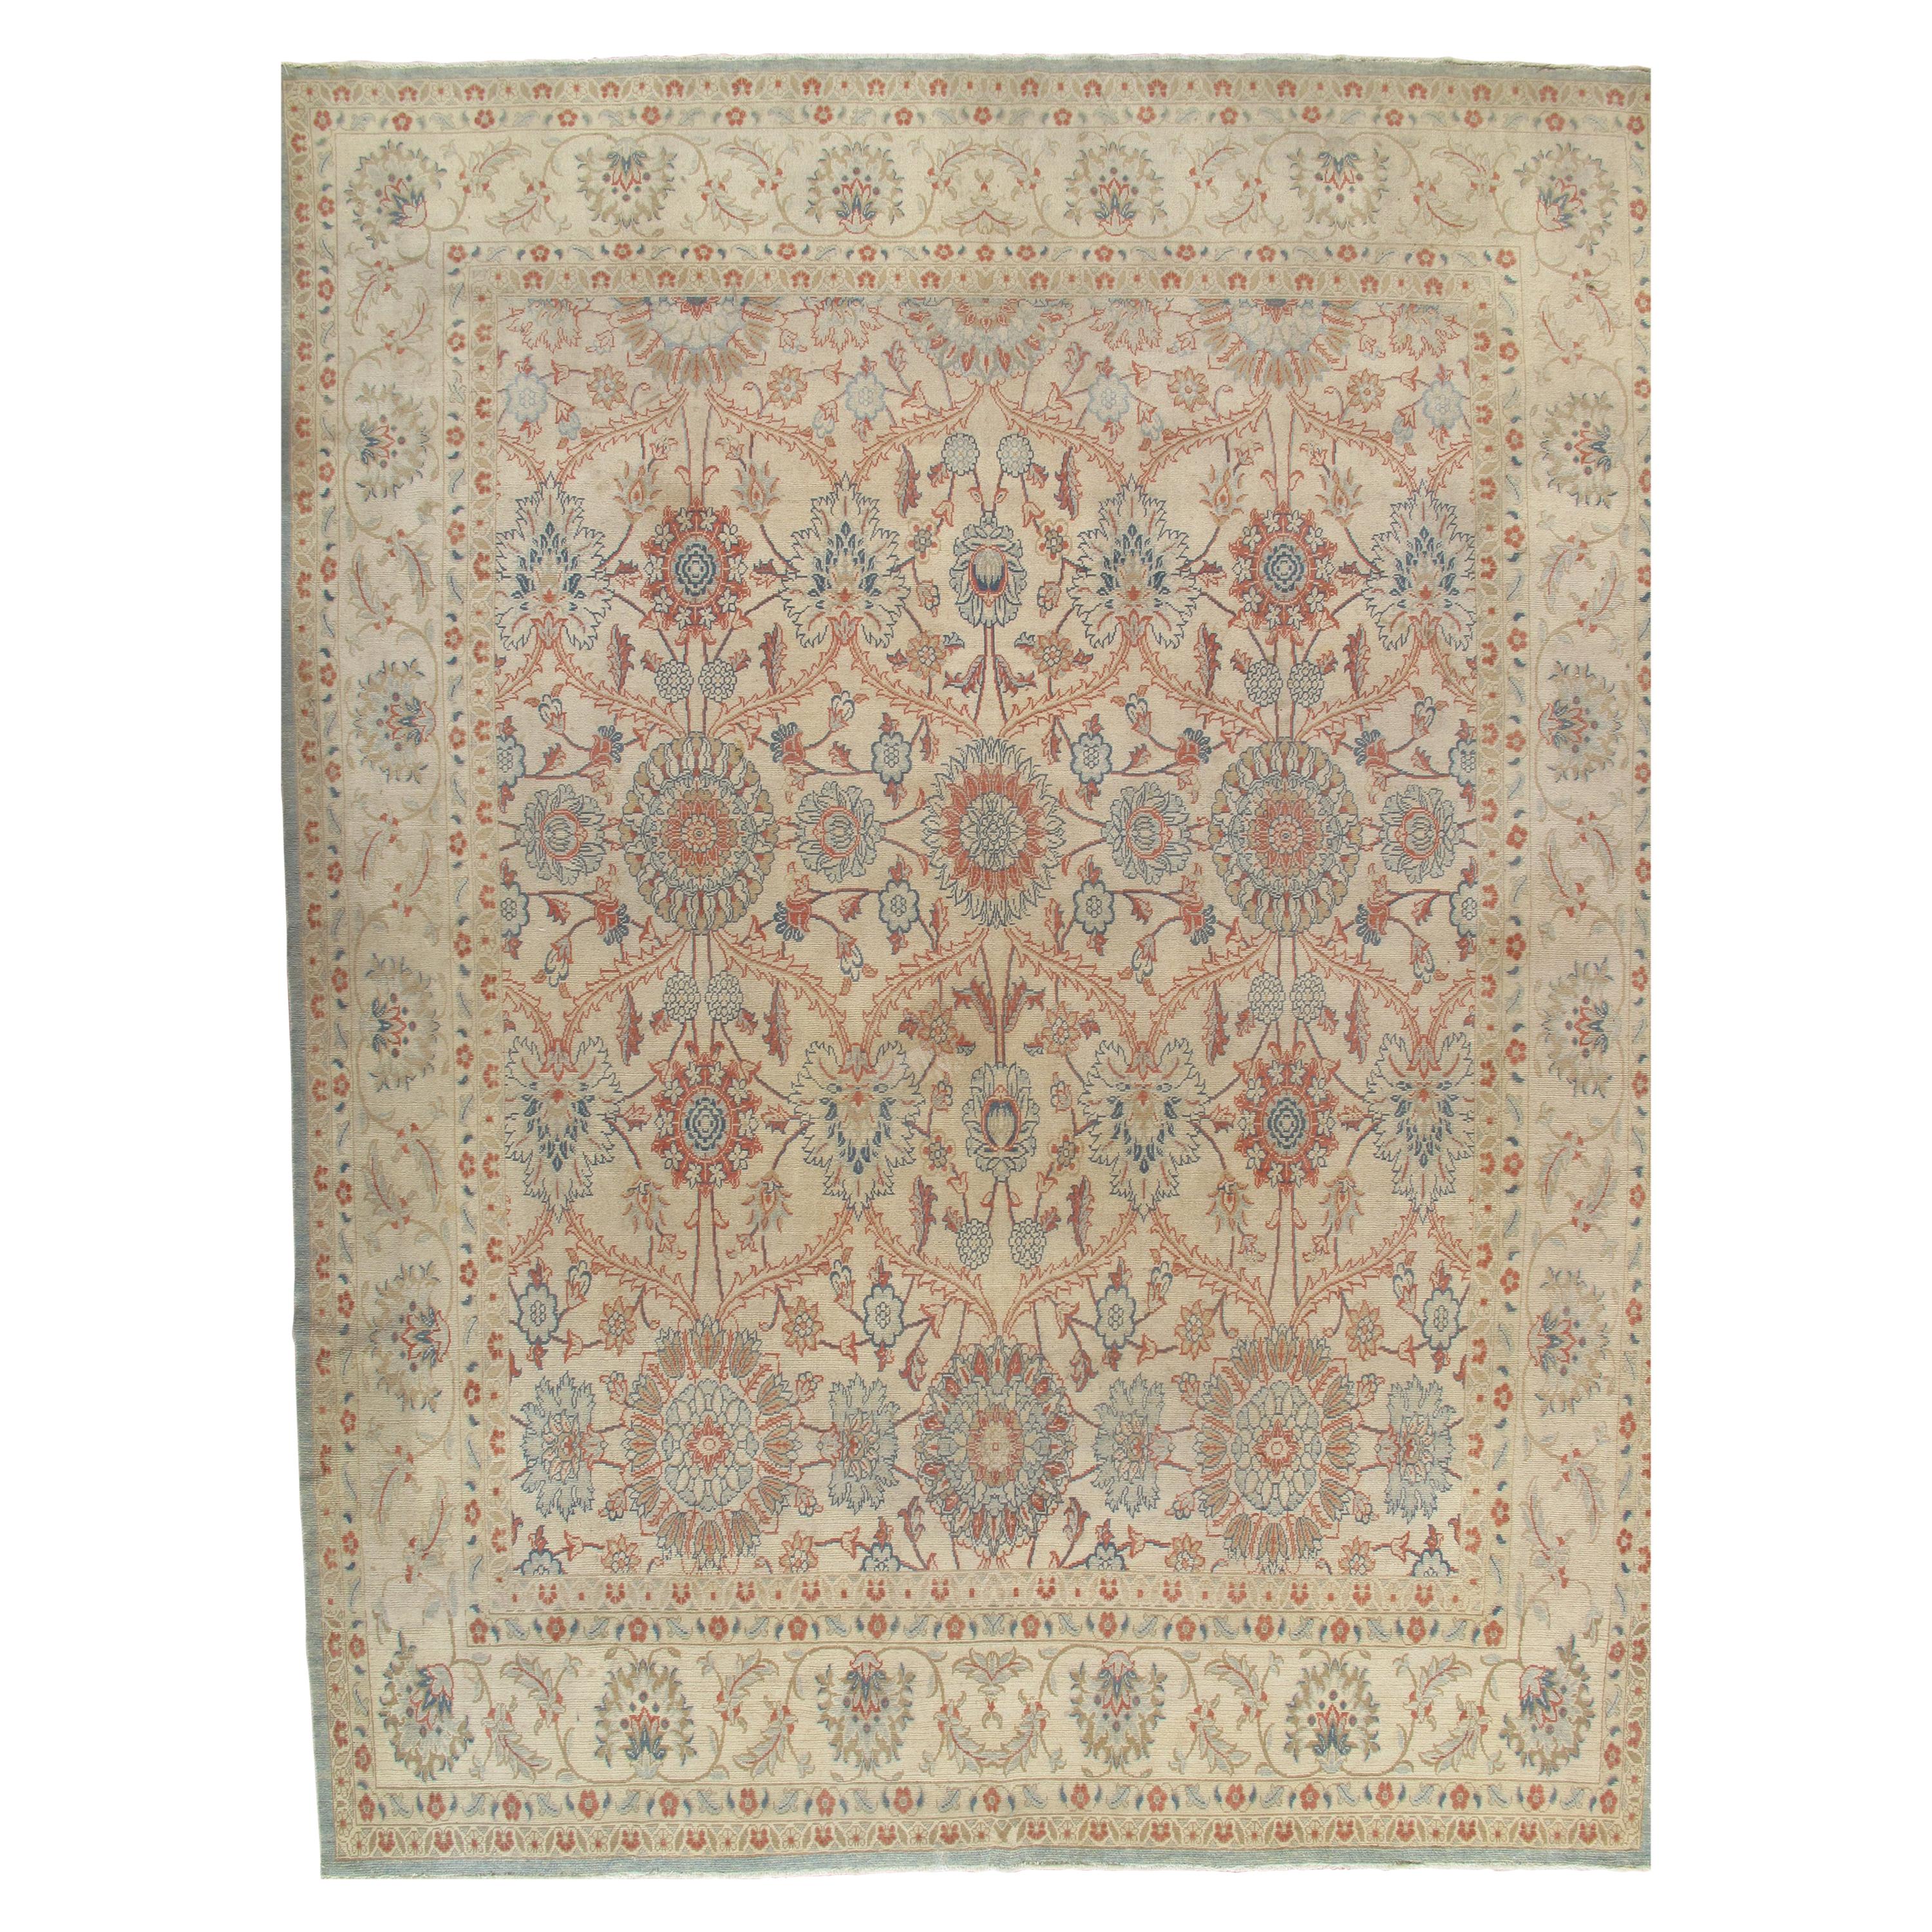 Vintage Persian Sultanabad Carpet, Handmade Oriental, Light Blue, Taupe, Ivory